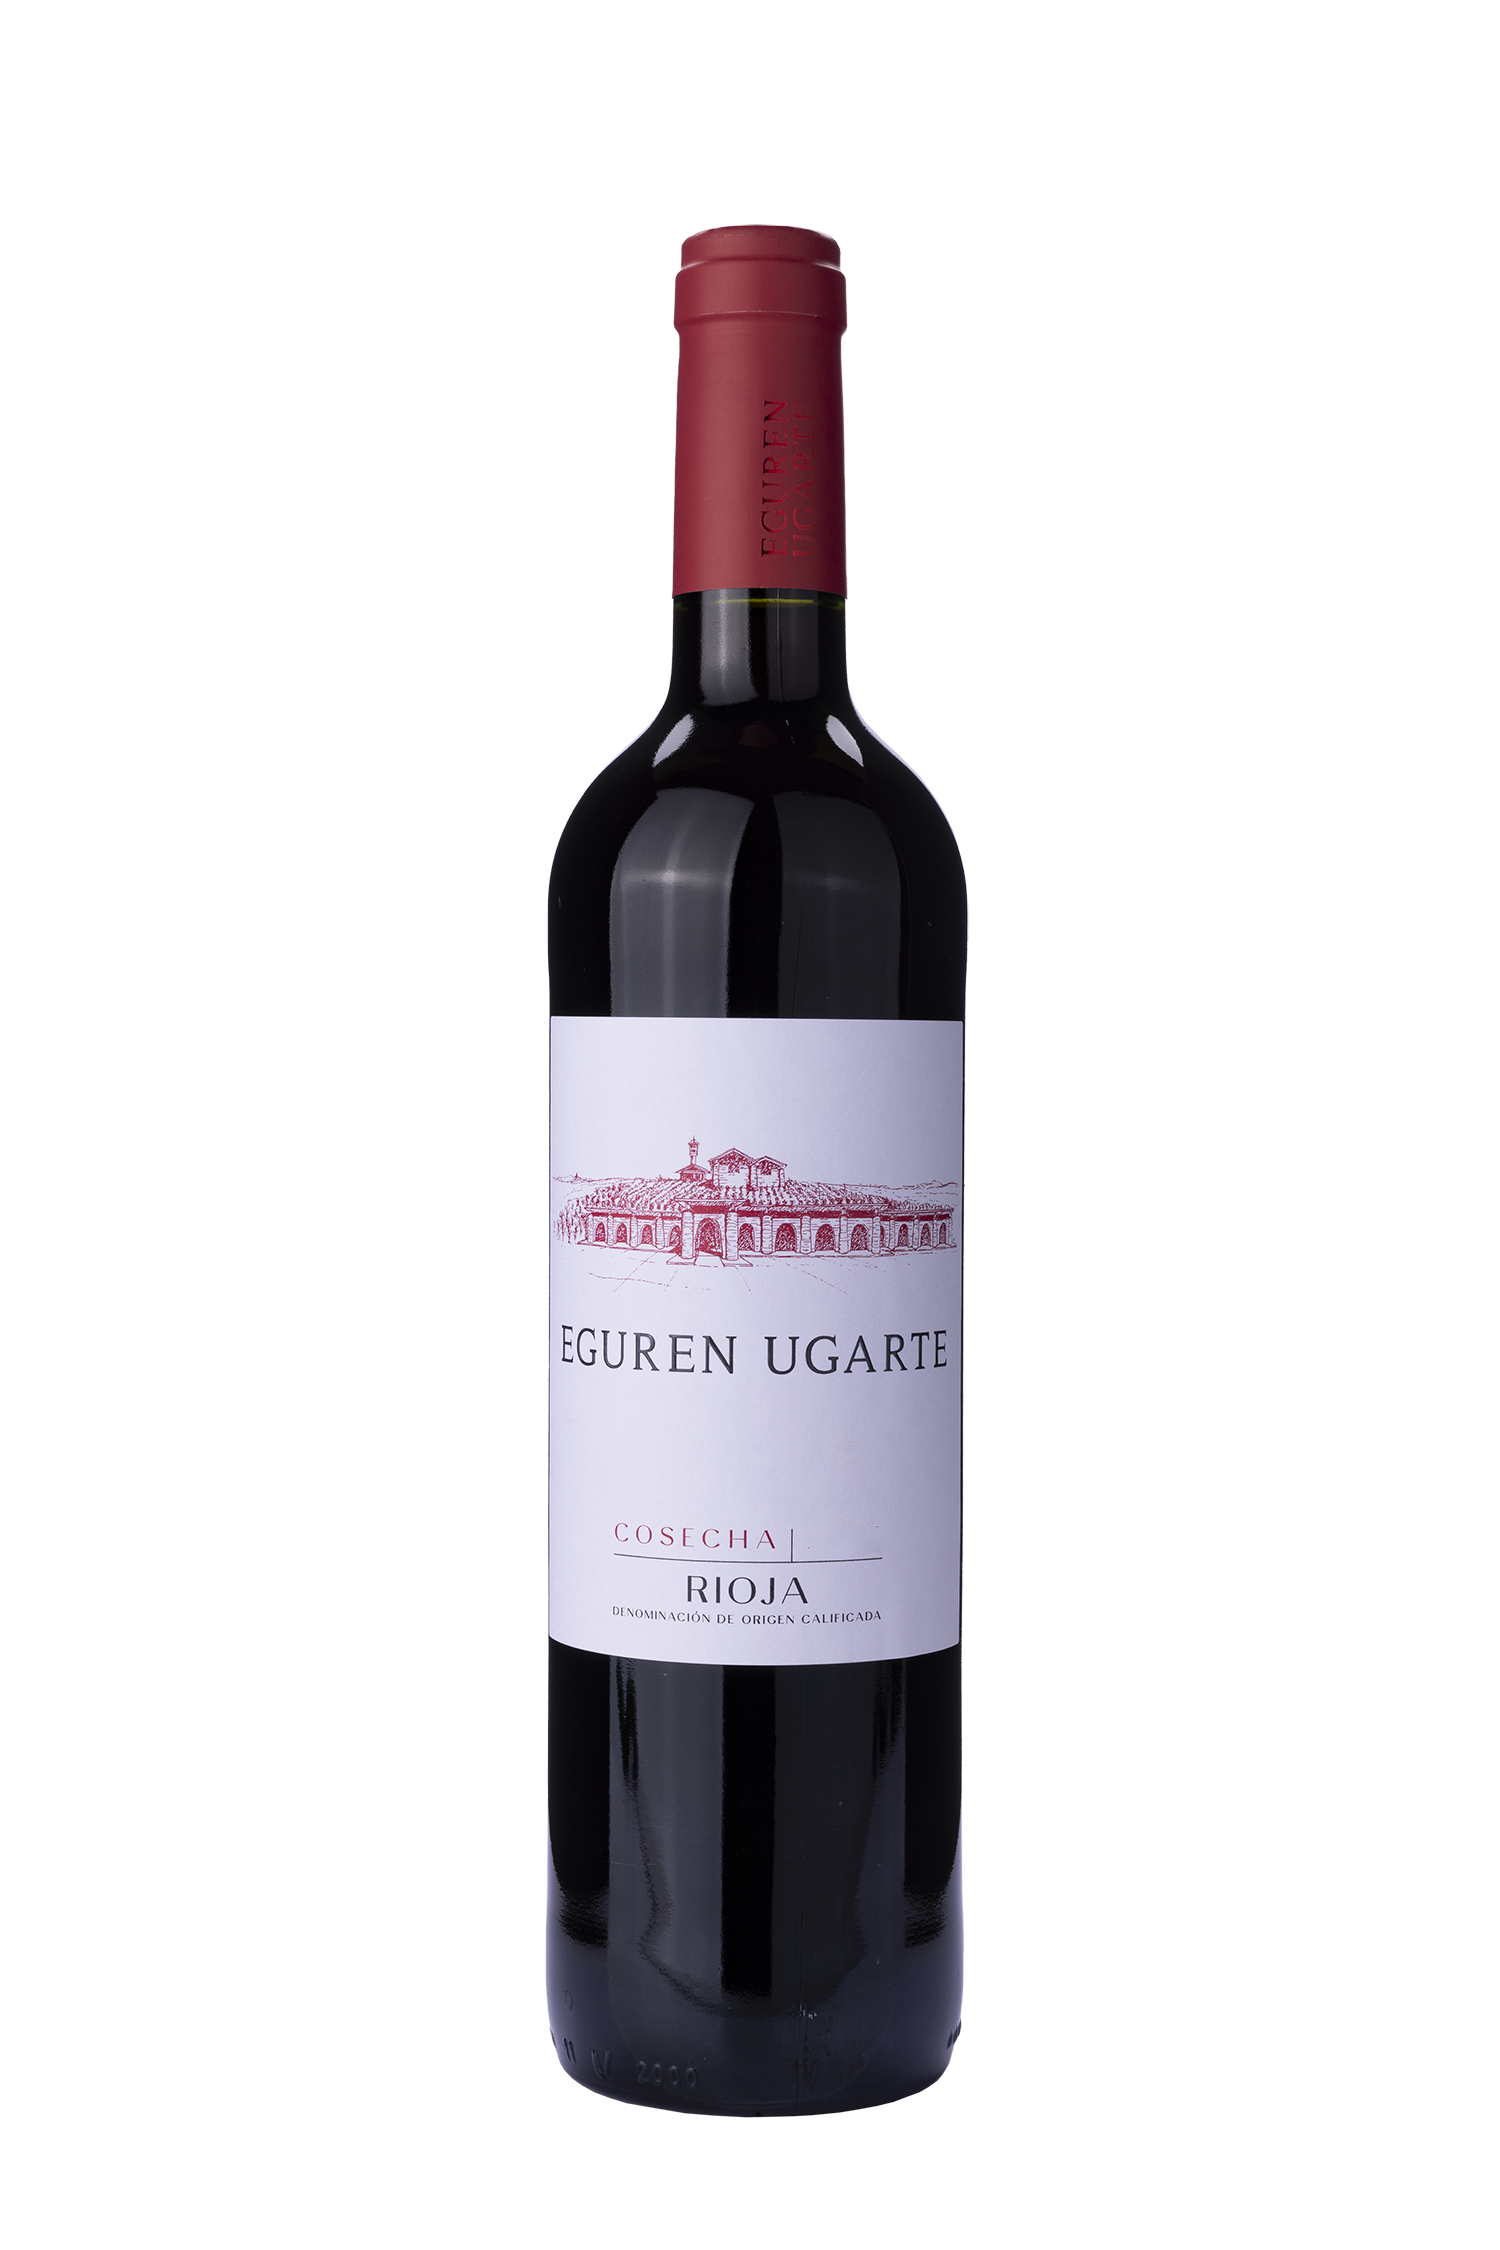 Cosecha Rioja 2020 - Eguren Ugarte